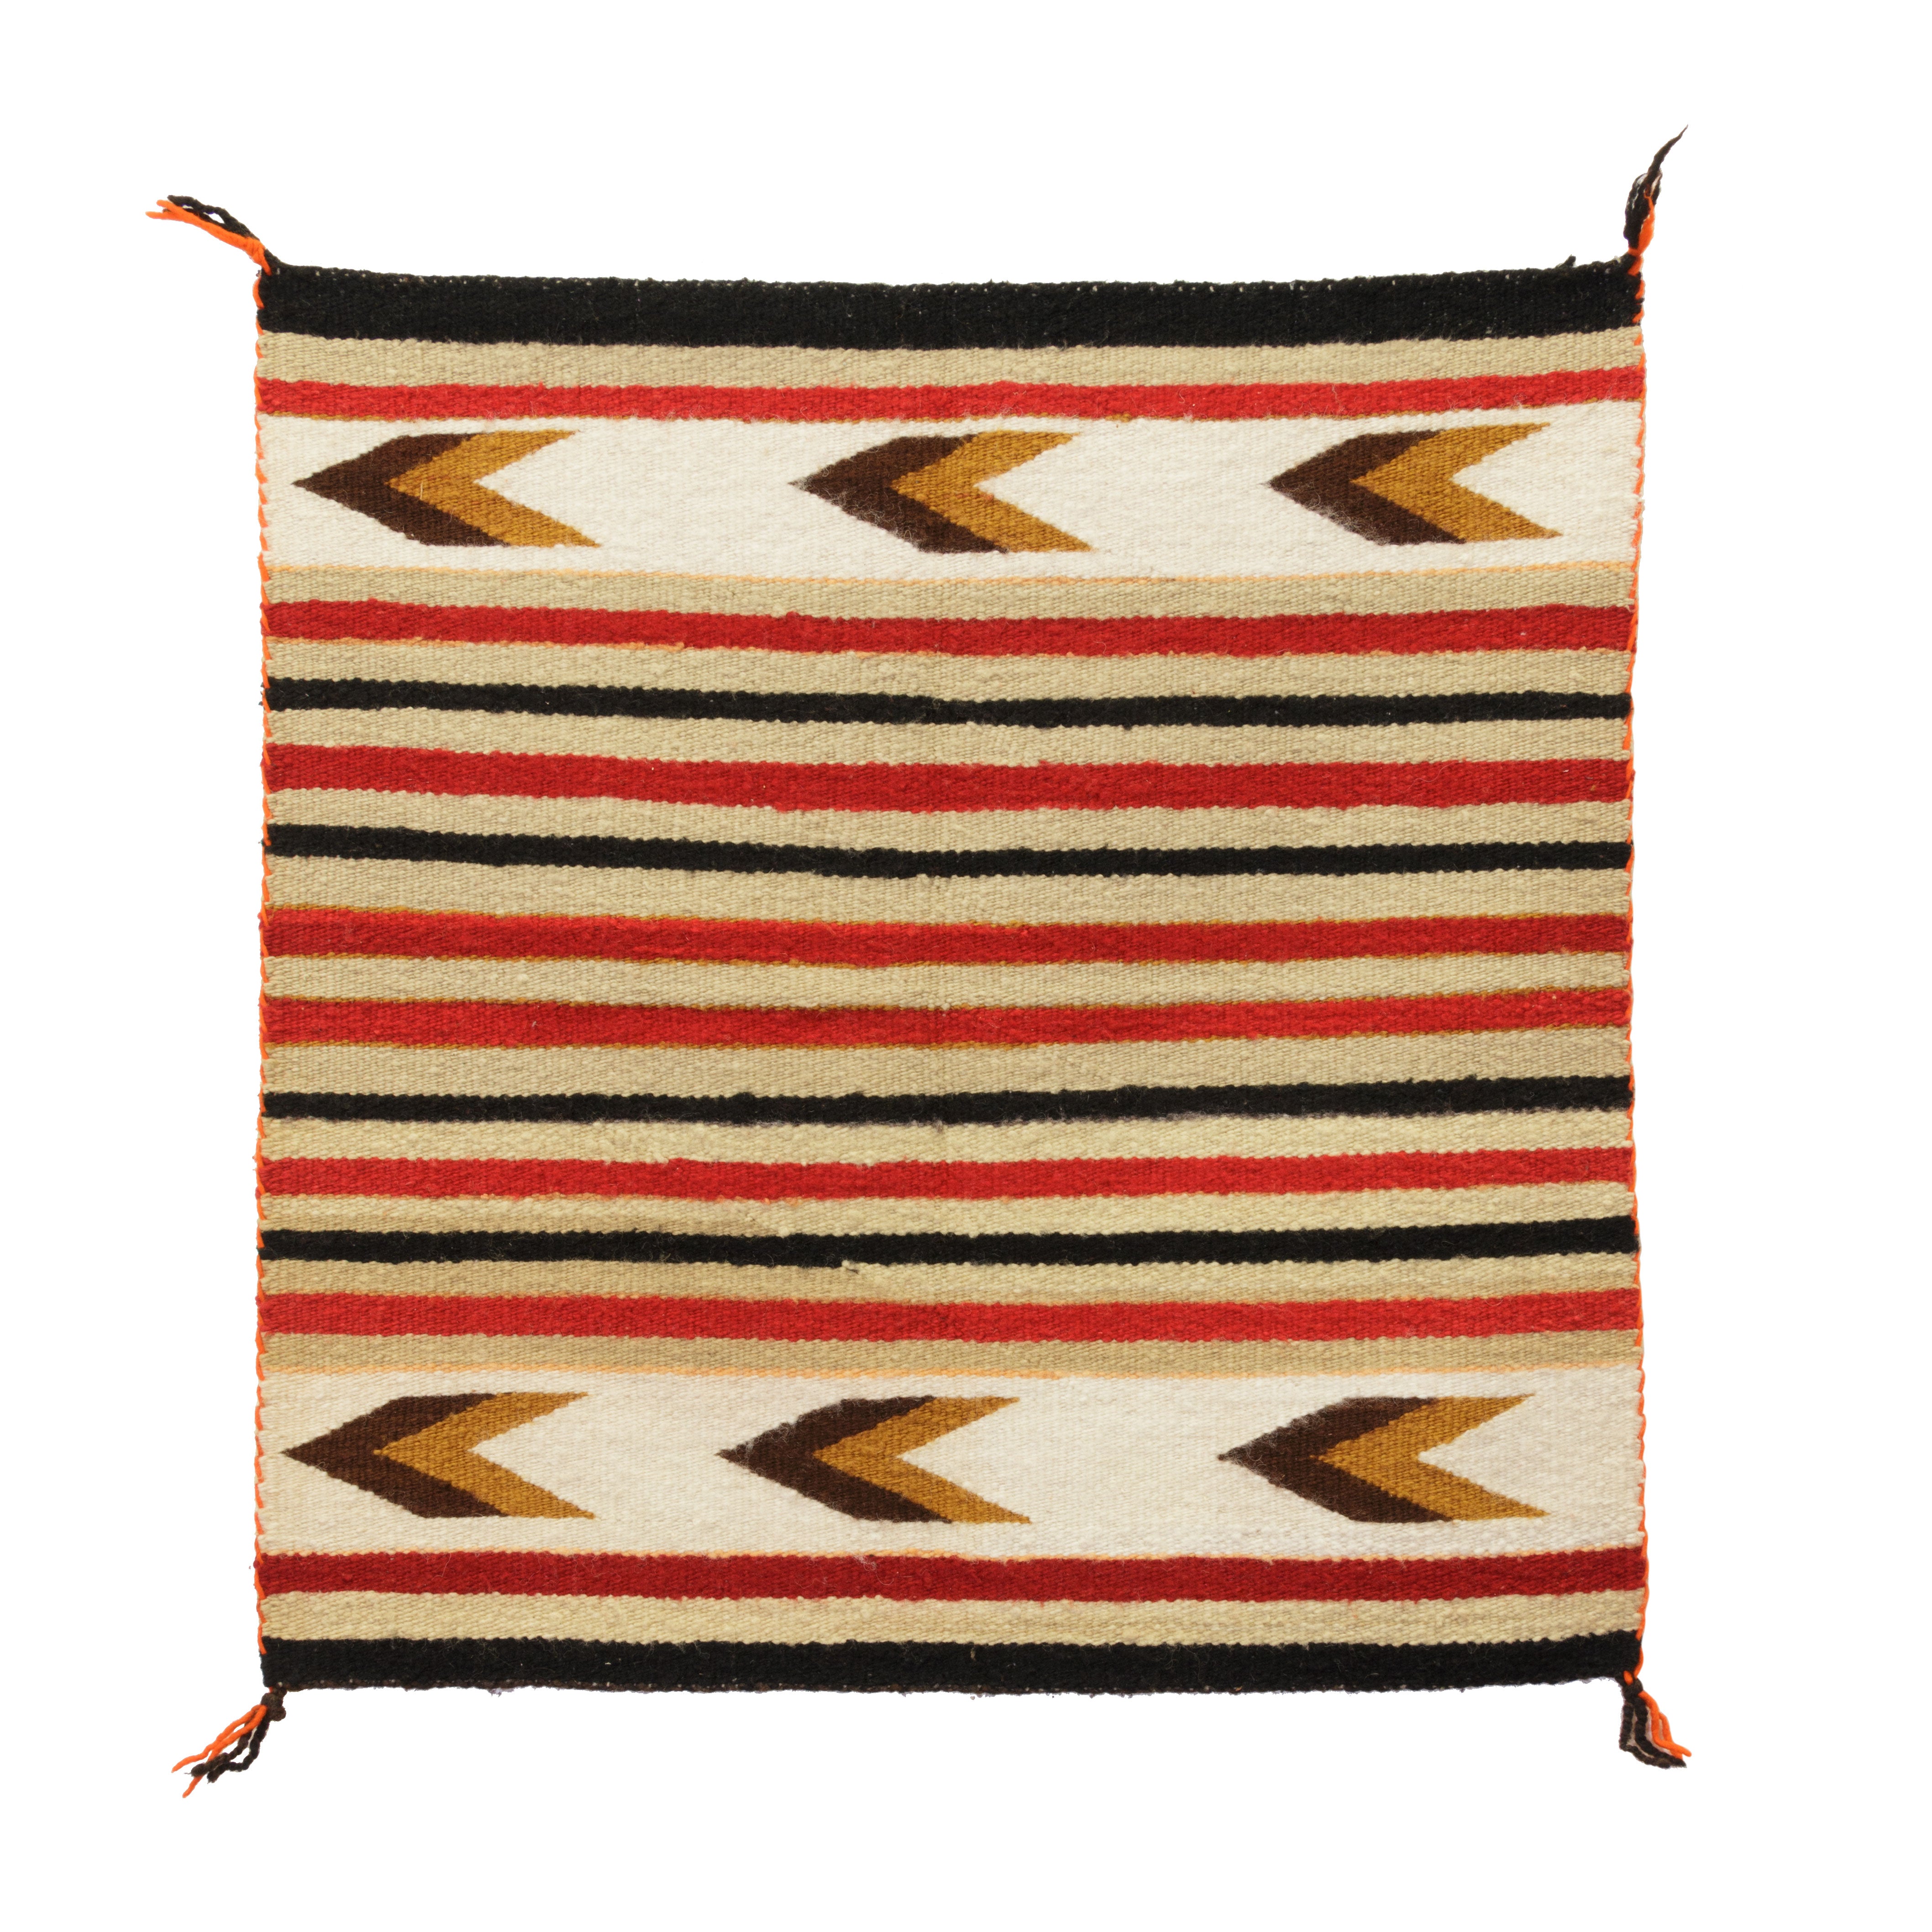 Navajo Banded Single Saddle, Native, Weaving, Single Saddle Blanket